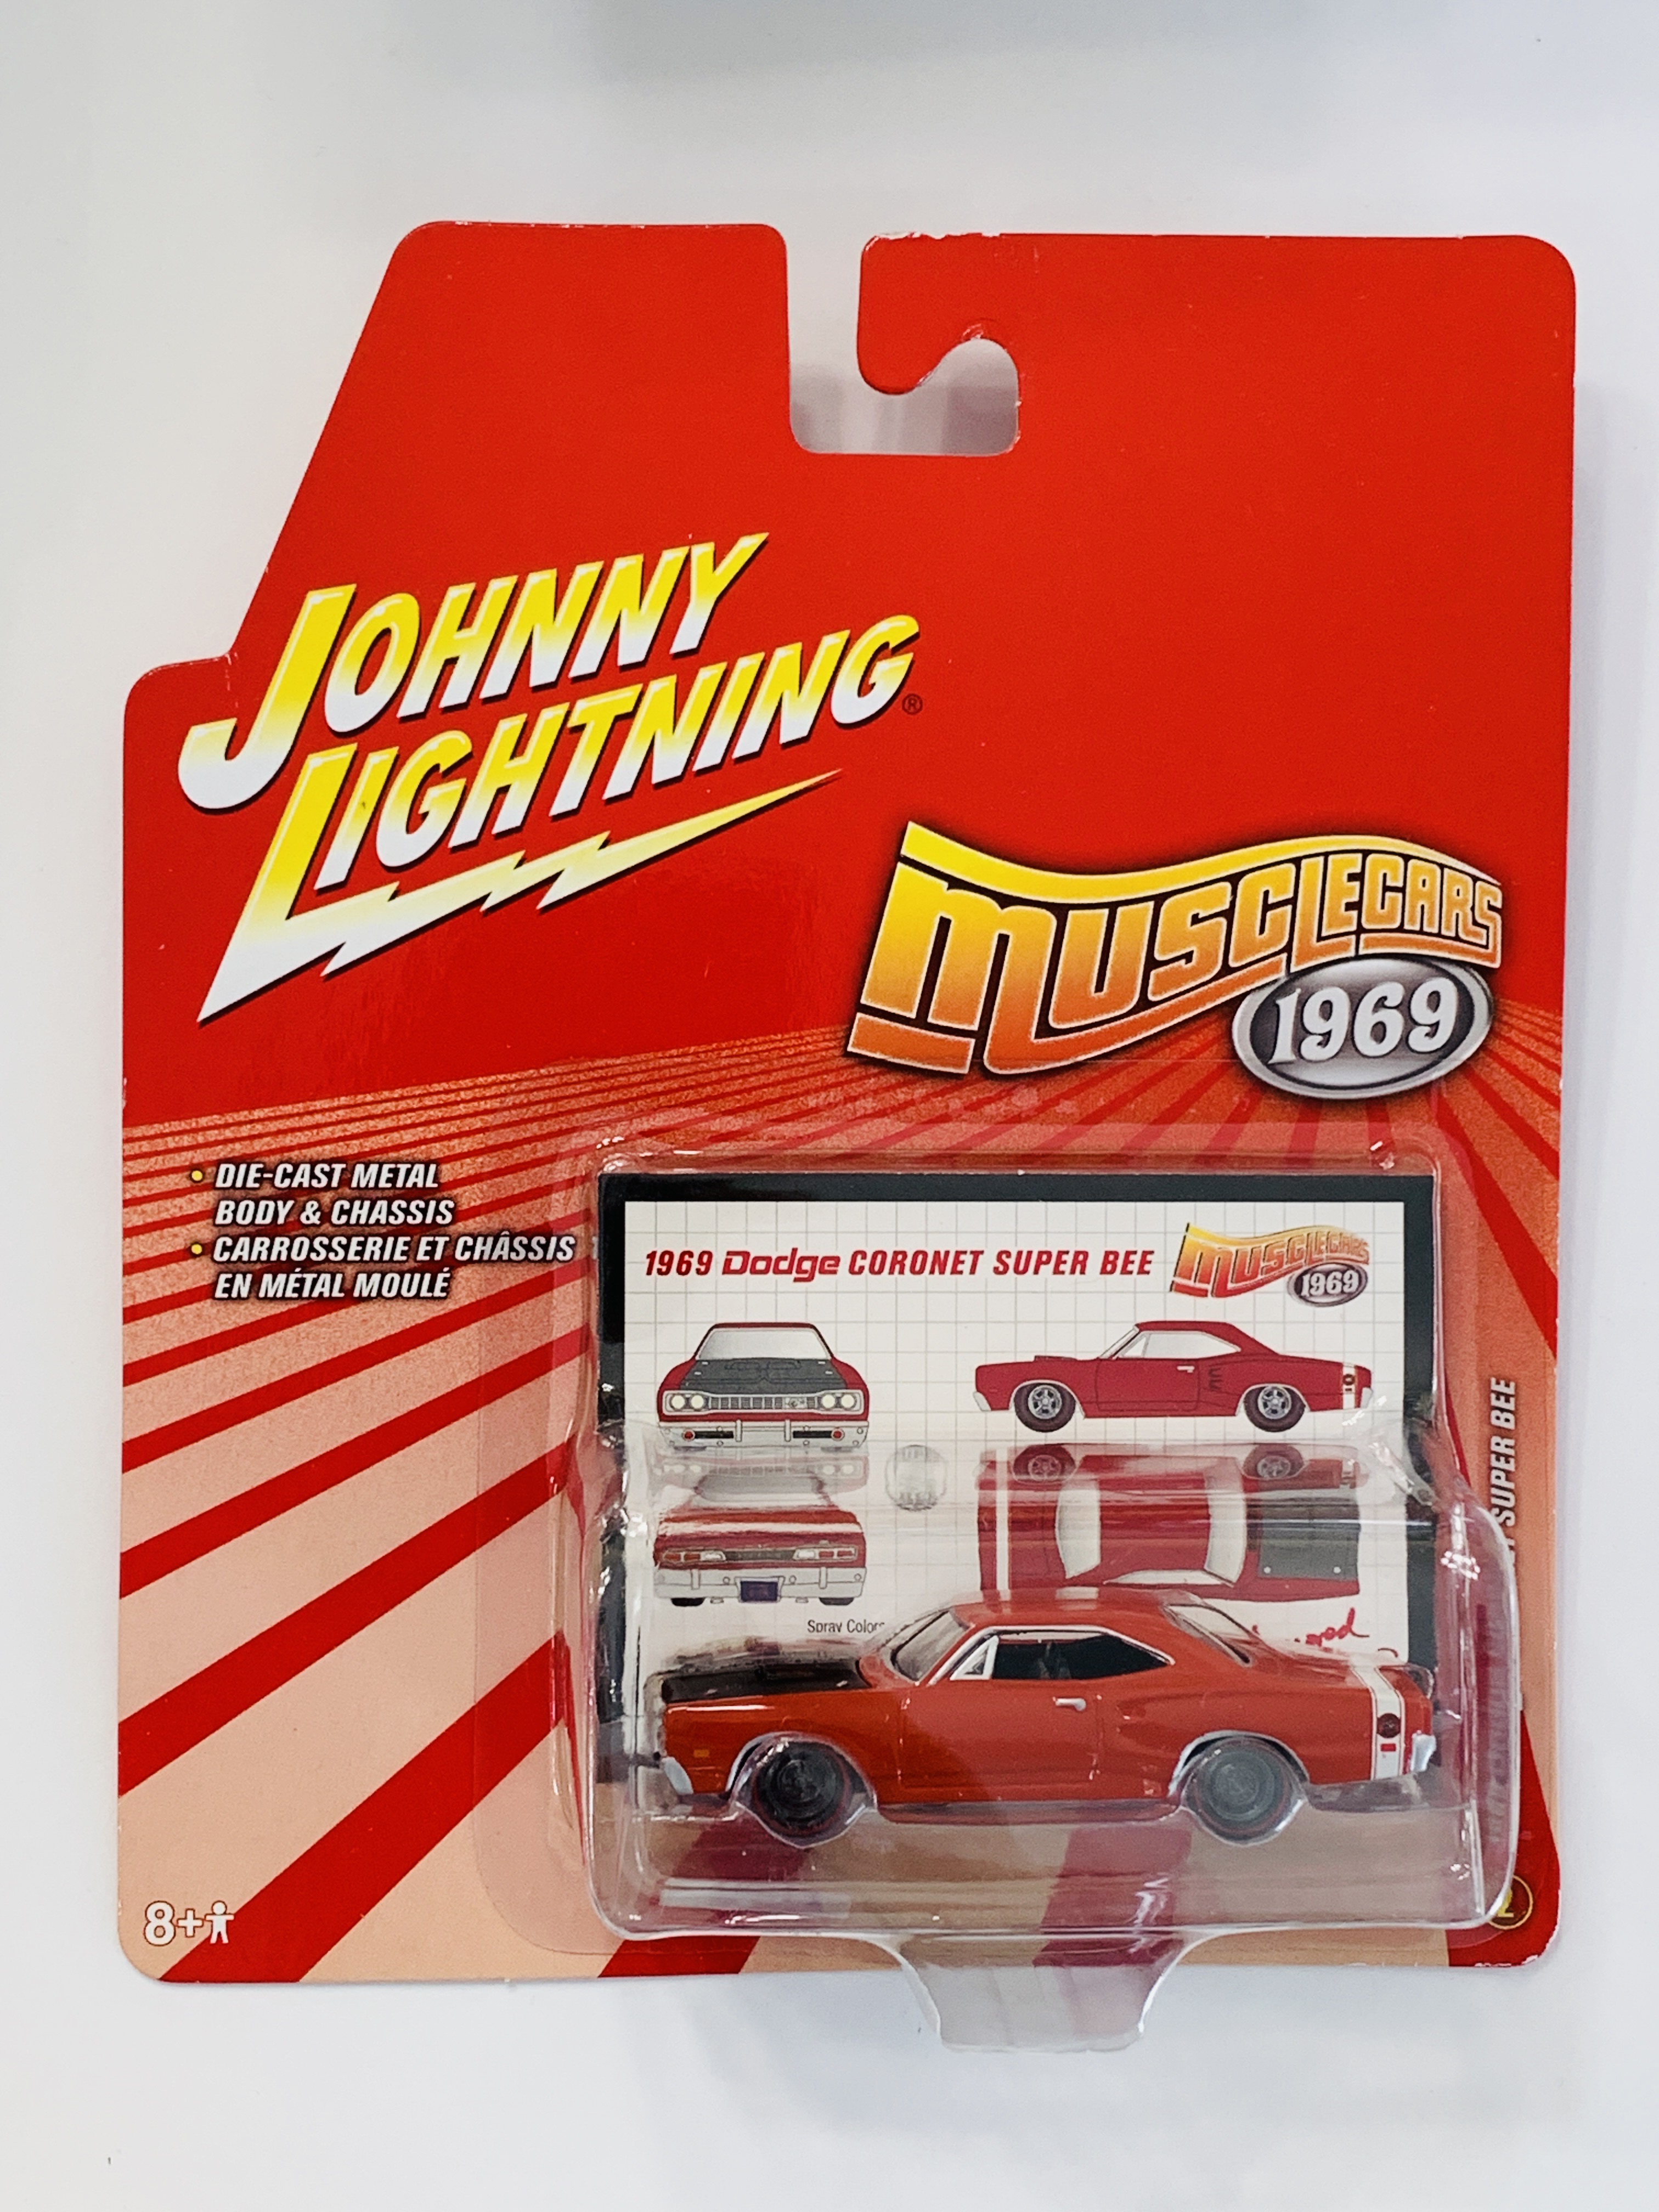 Johnny Lightning Muscle Cars 1969 Dodge Coronet Super Bee